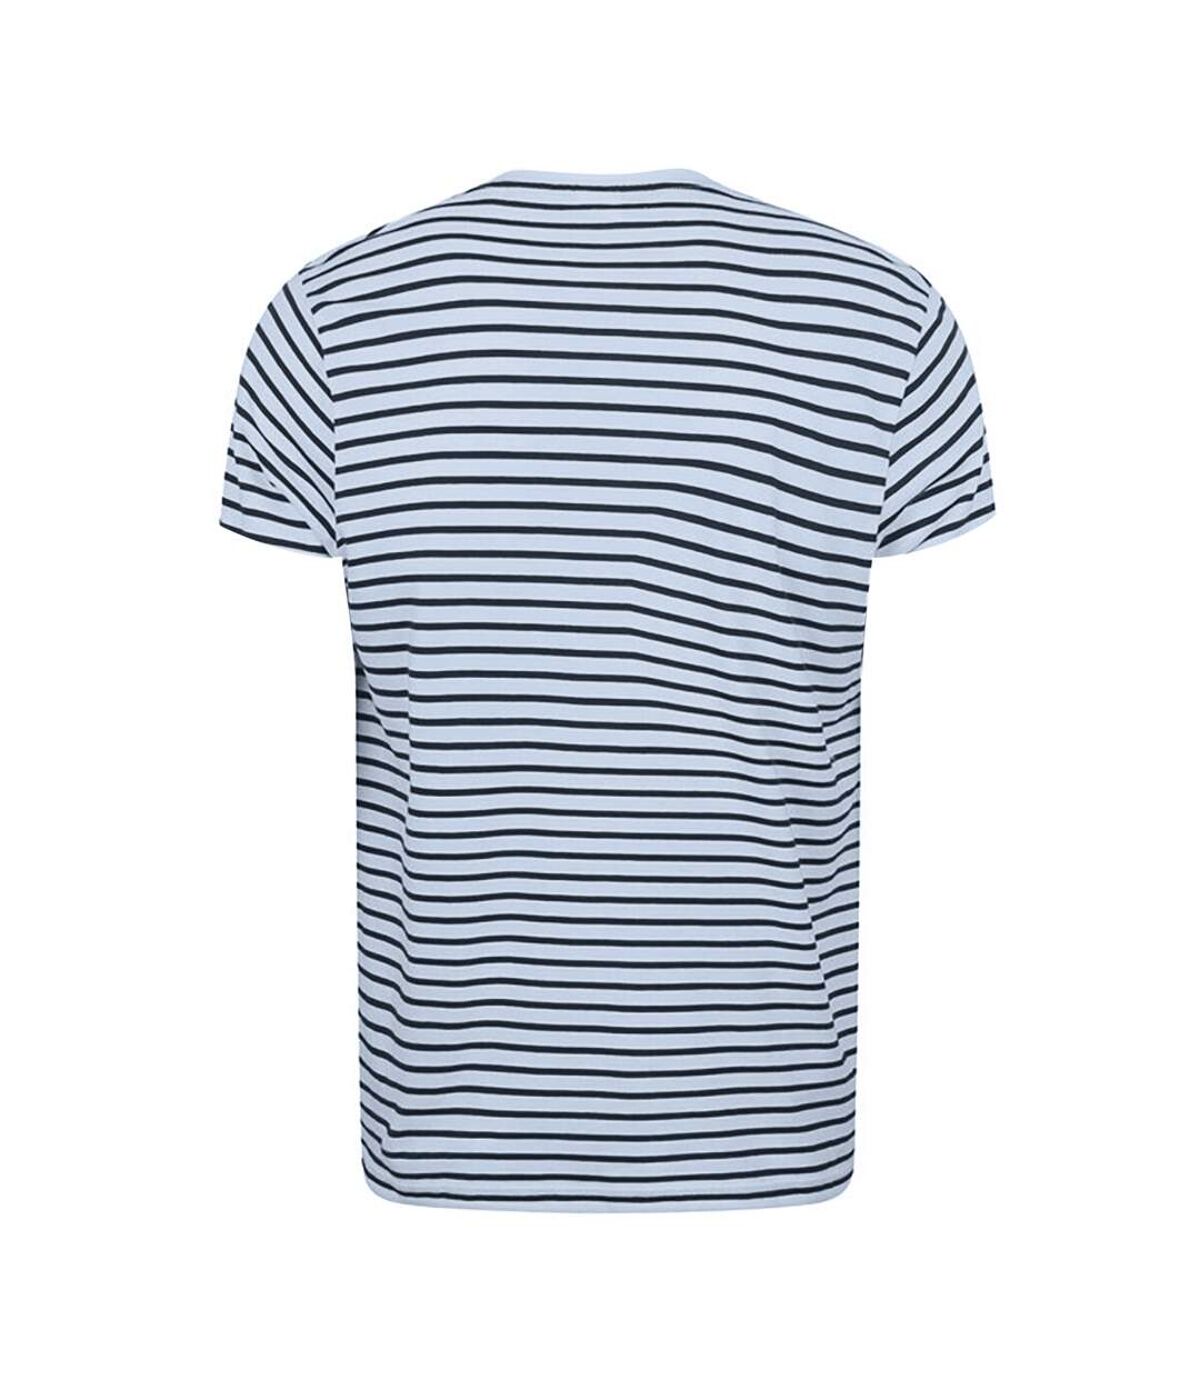 Skinni Fit Striped - T-shirt à manches courtes - Adulte unisexe (Blanc / bleu marine) - UTRW5499